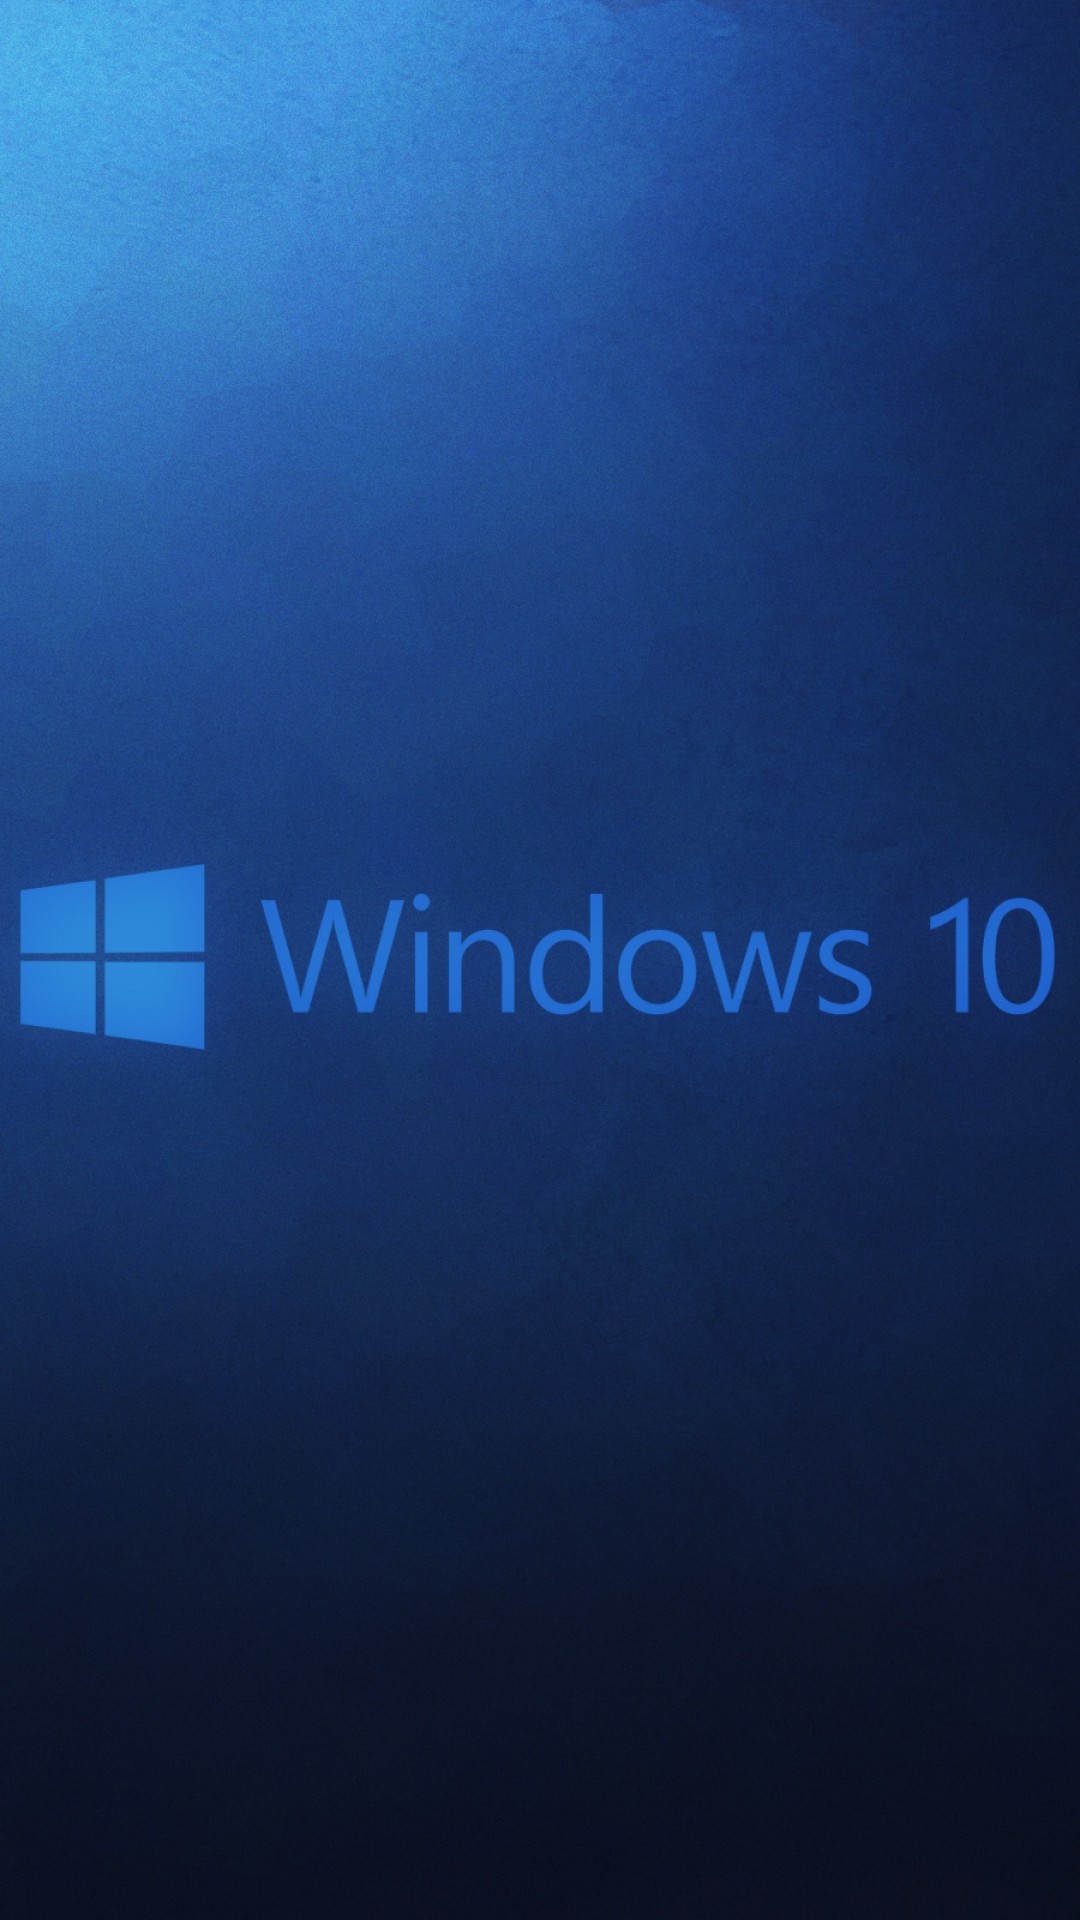 1080x1920 Microsoft Wallpapers for Windows 10 - WallpaperSafari